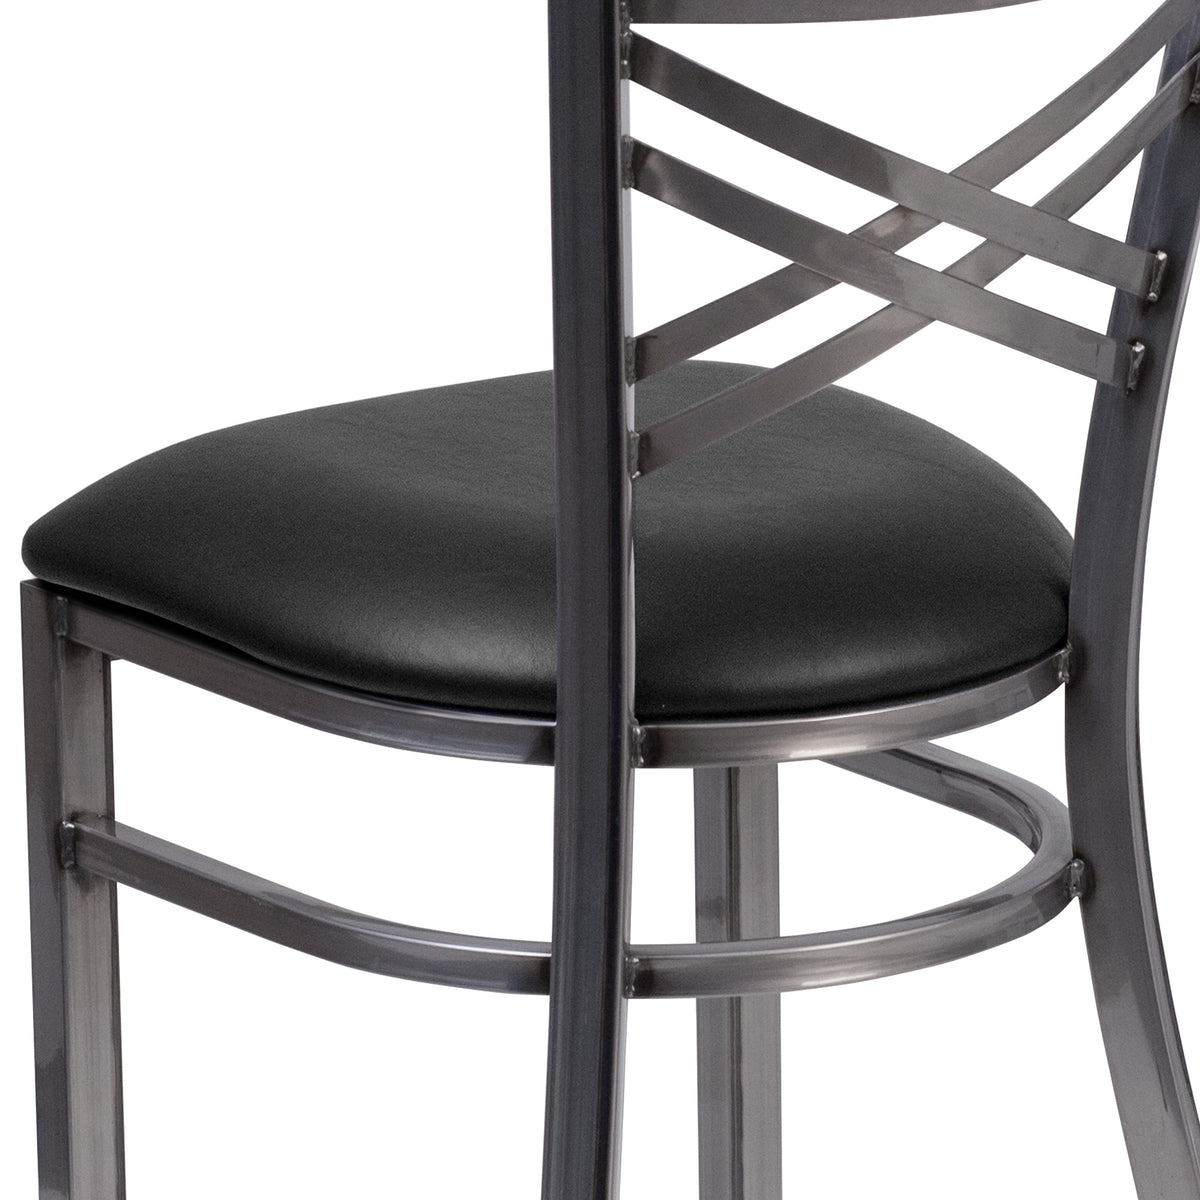 Black Vinyl Seat/Clear Coated Metal Frame |#| Clear Coated inchXinch Back Metal Restaurant Chair - Black Vinyl Seat